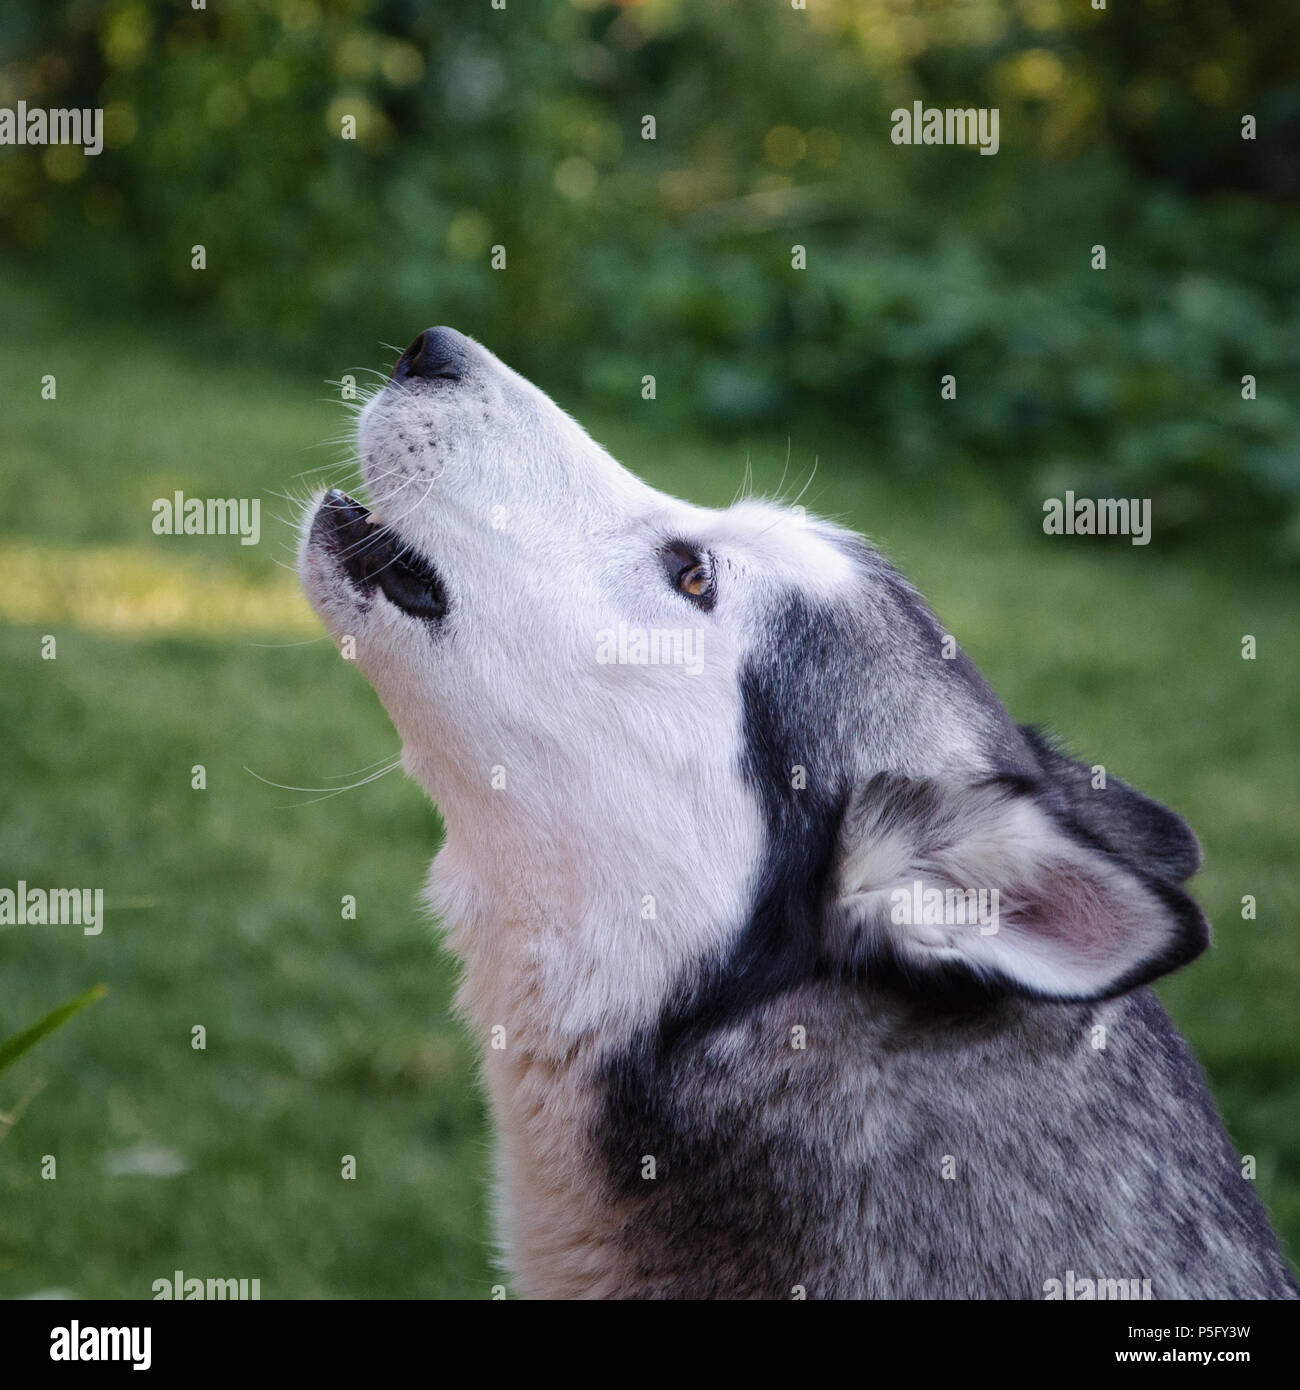 Siberian Husky dog howling on a grassy background Stock Photo